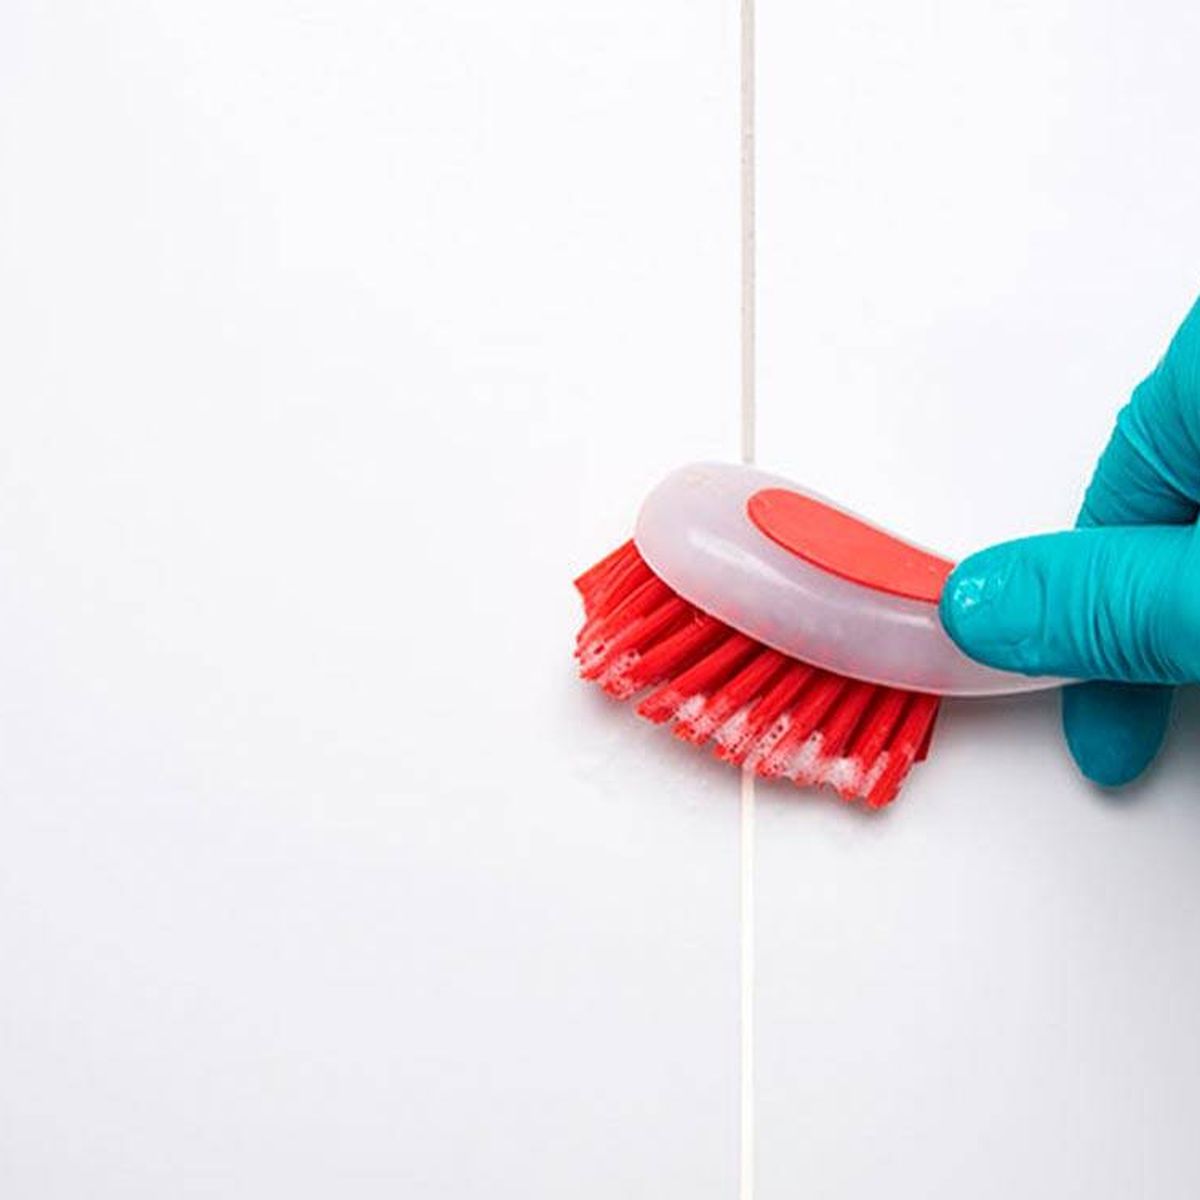 Spray Limpia Moho para paredes, juntas, azulejos, baldosas, baño